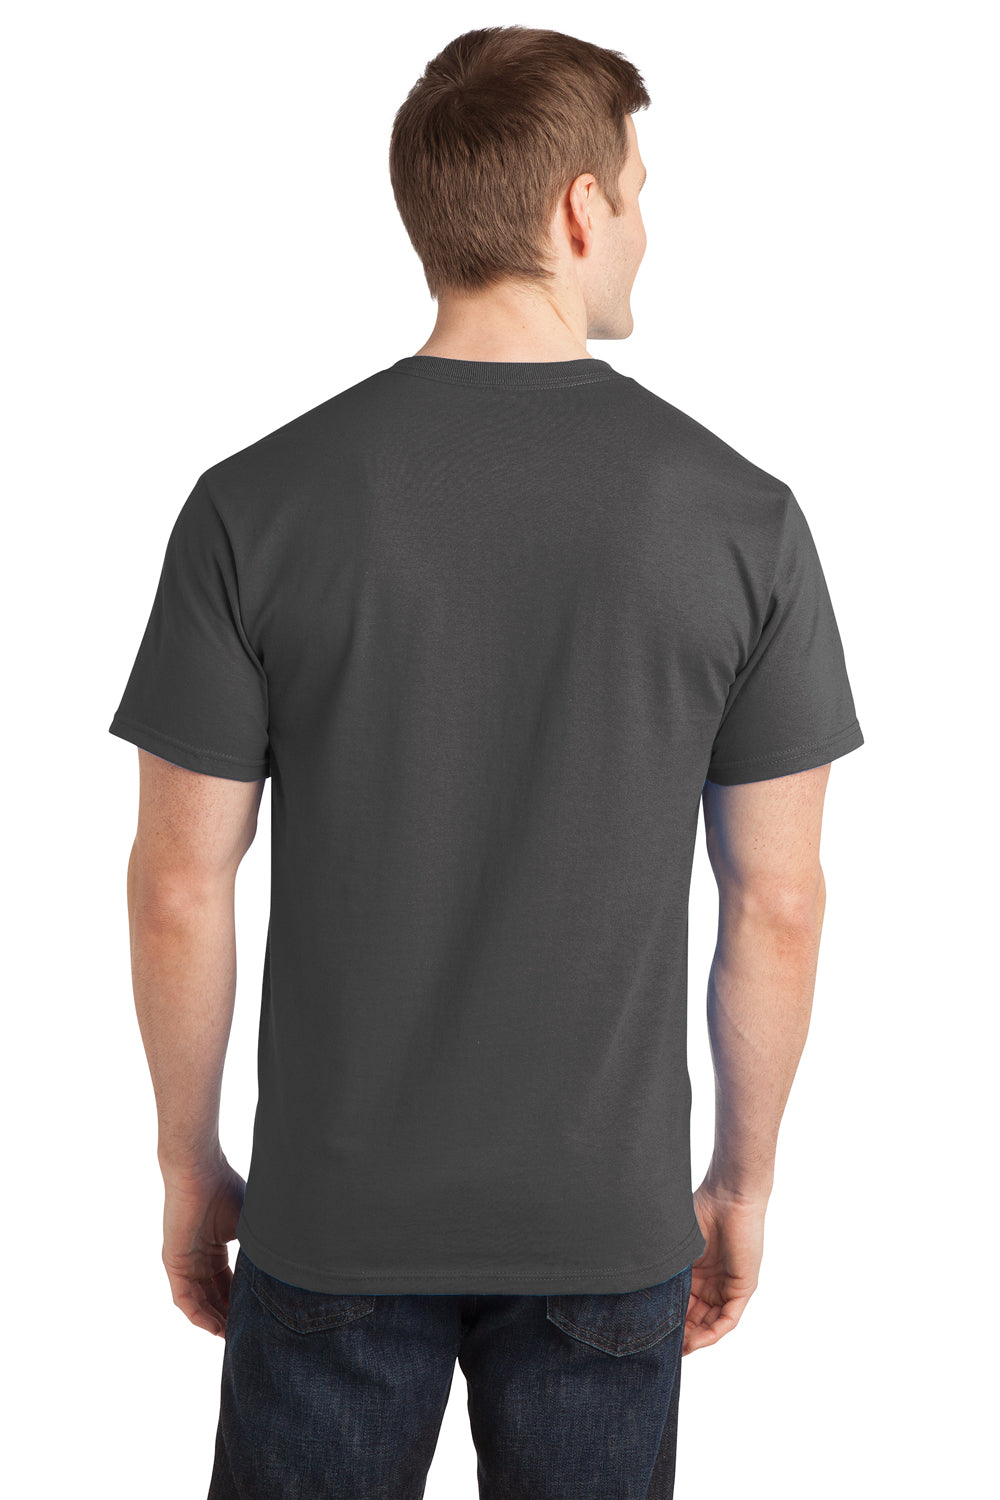 Port & Company PC150 Mens Short Sleeve Crewneck T-Shirt Charcoal Grey Back